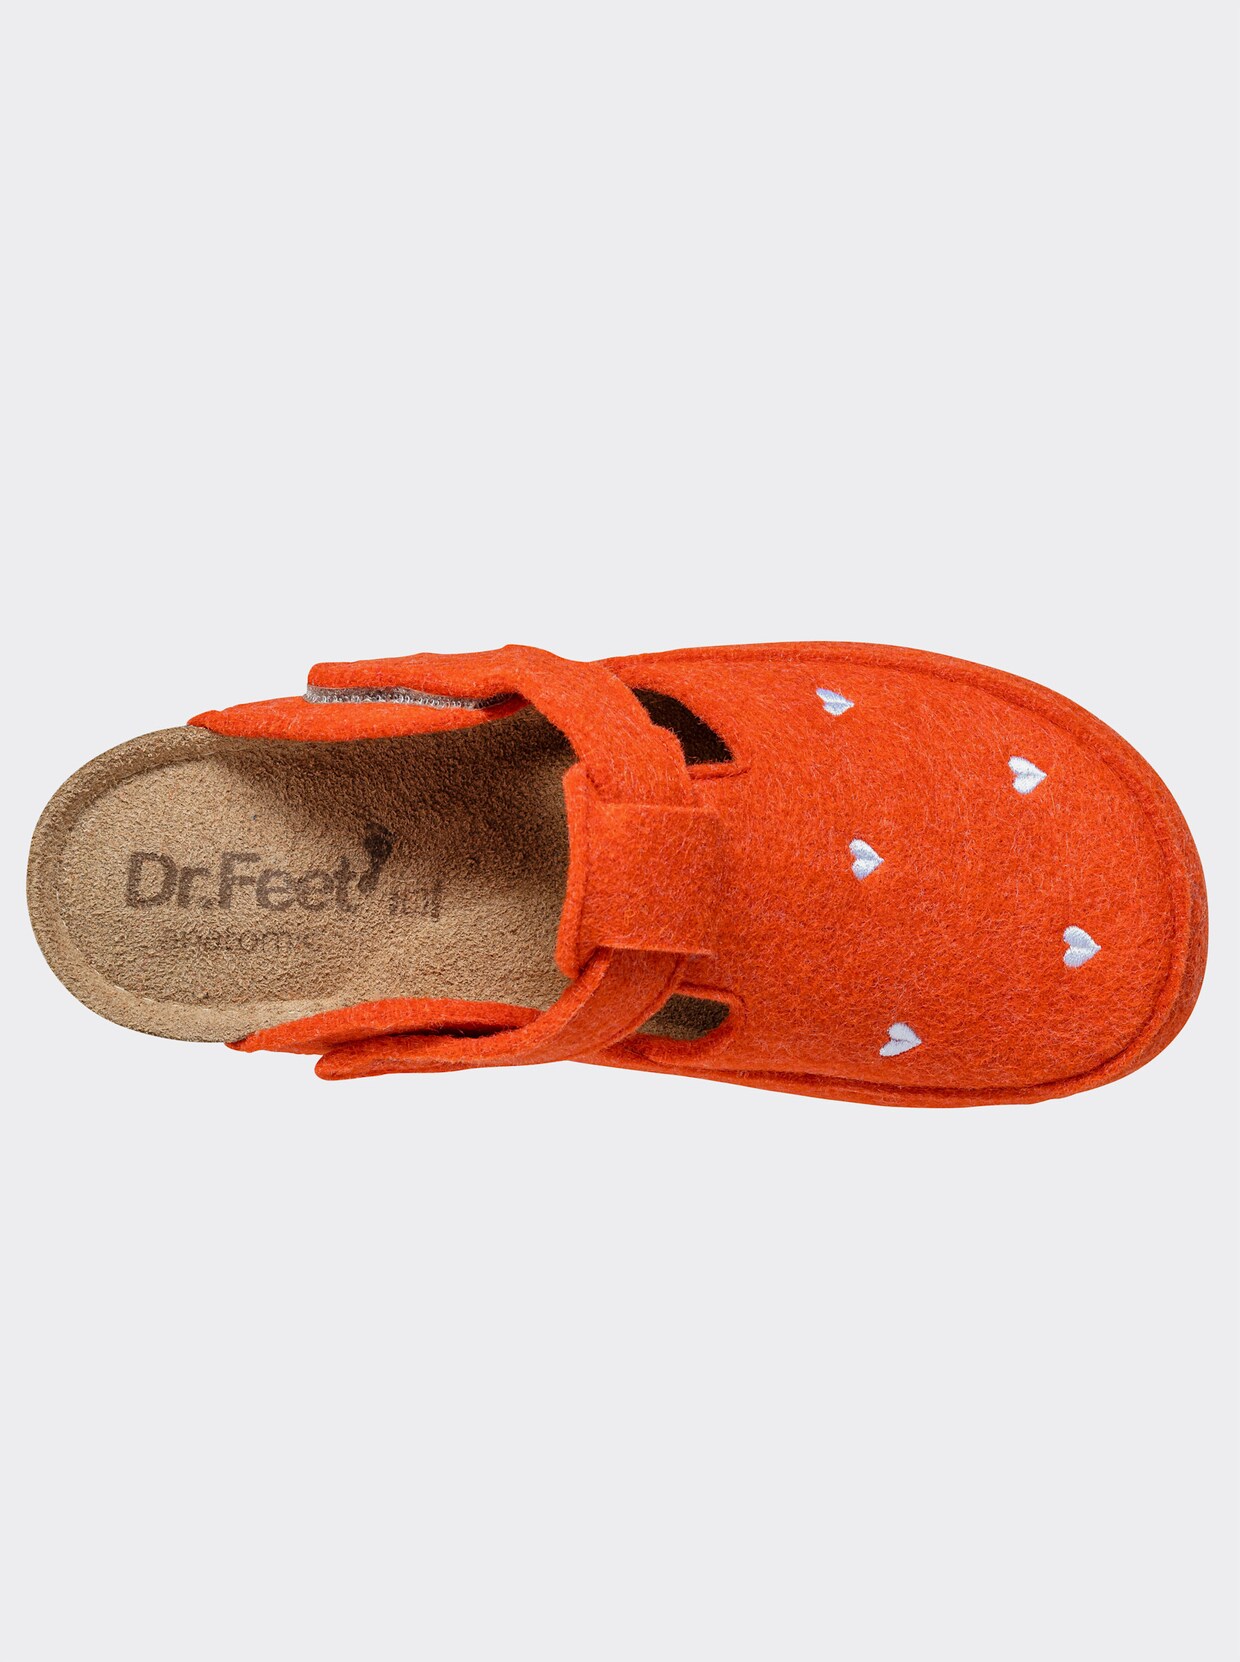 Dr. Feet Huisschoen - oranje